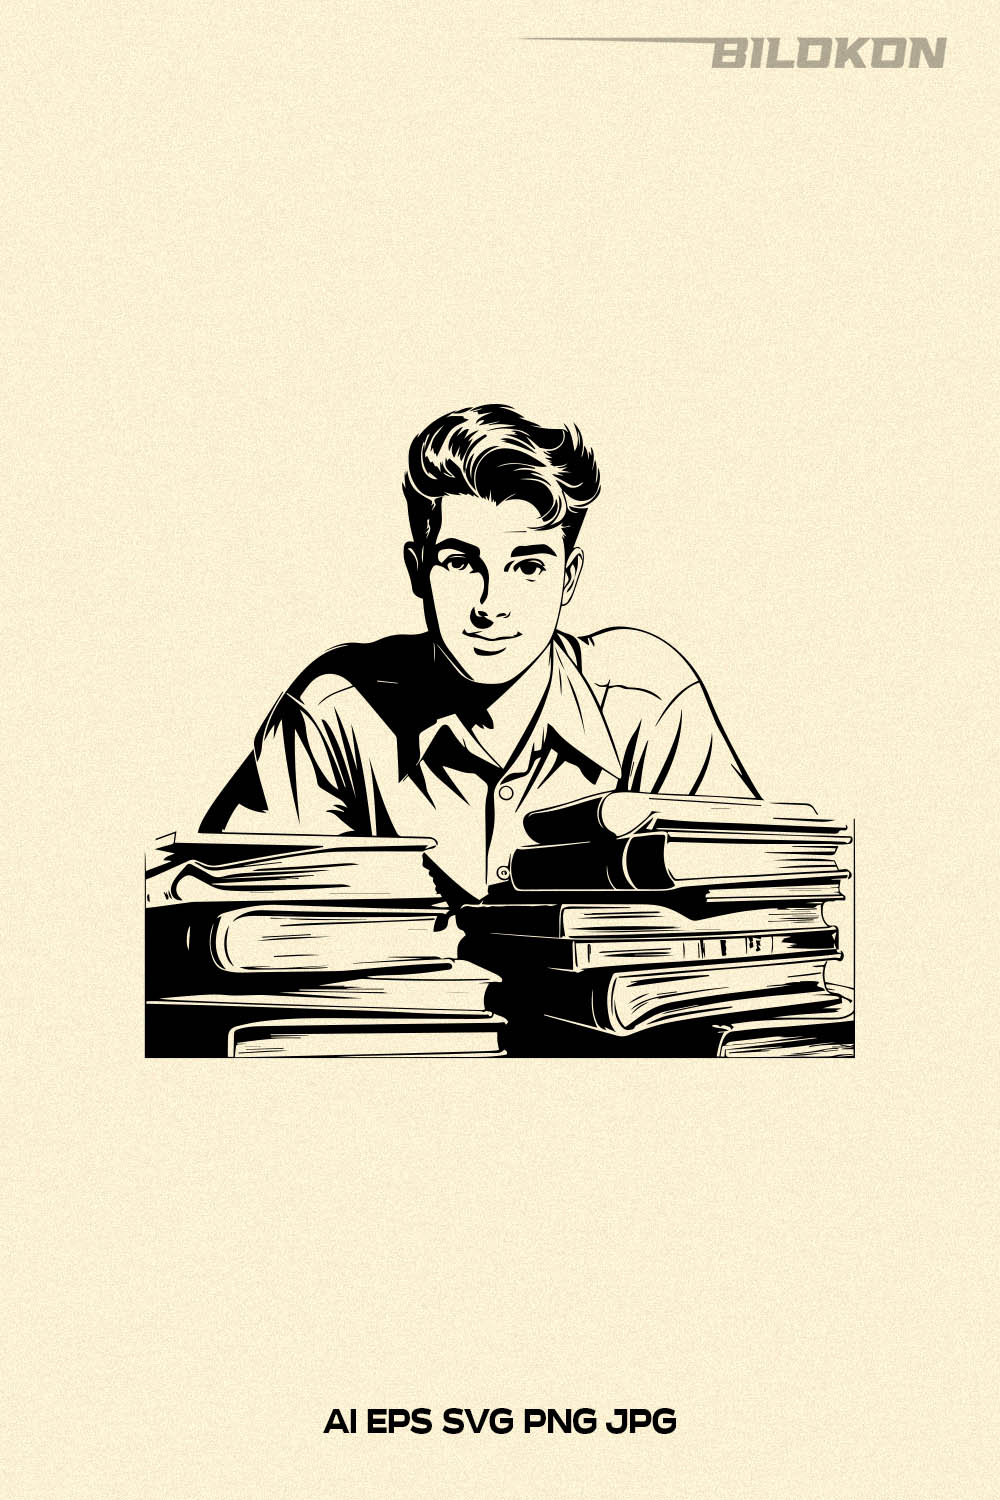 Vintage boy reads books, boy studies at school, SVG Vector pinterest preview image.